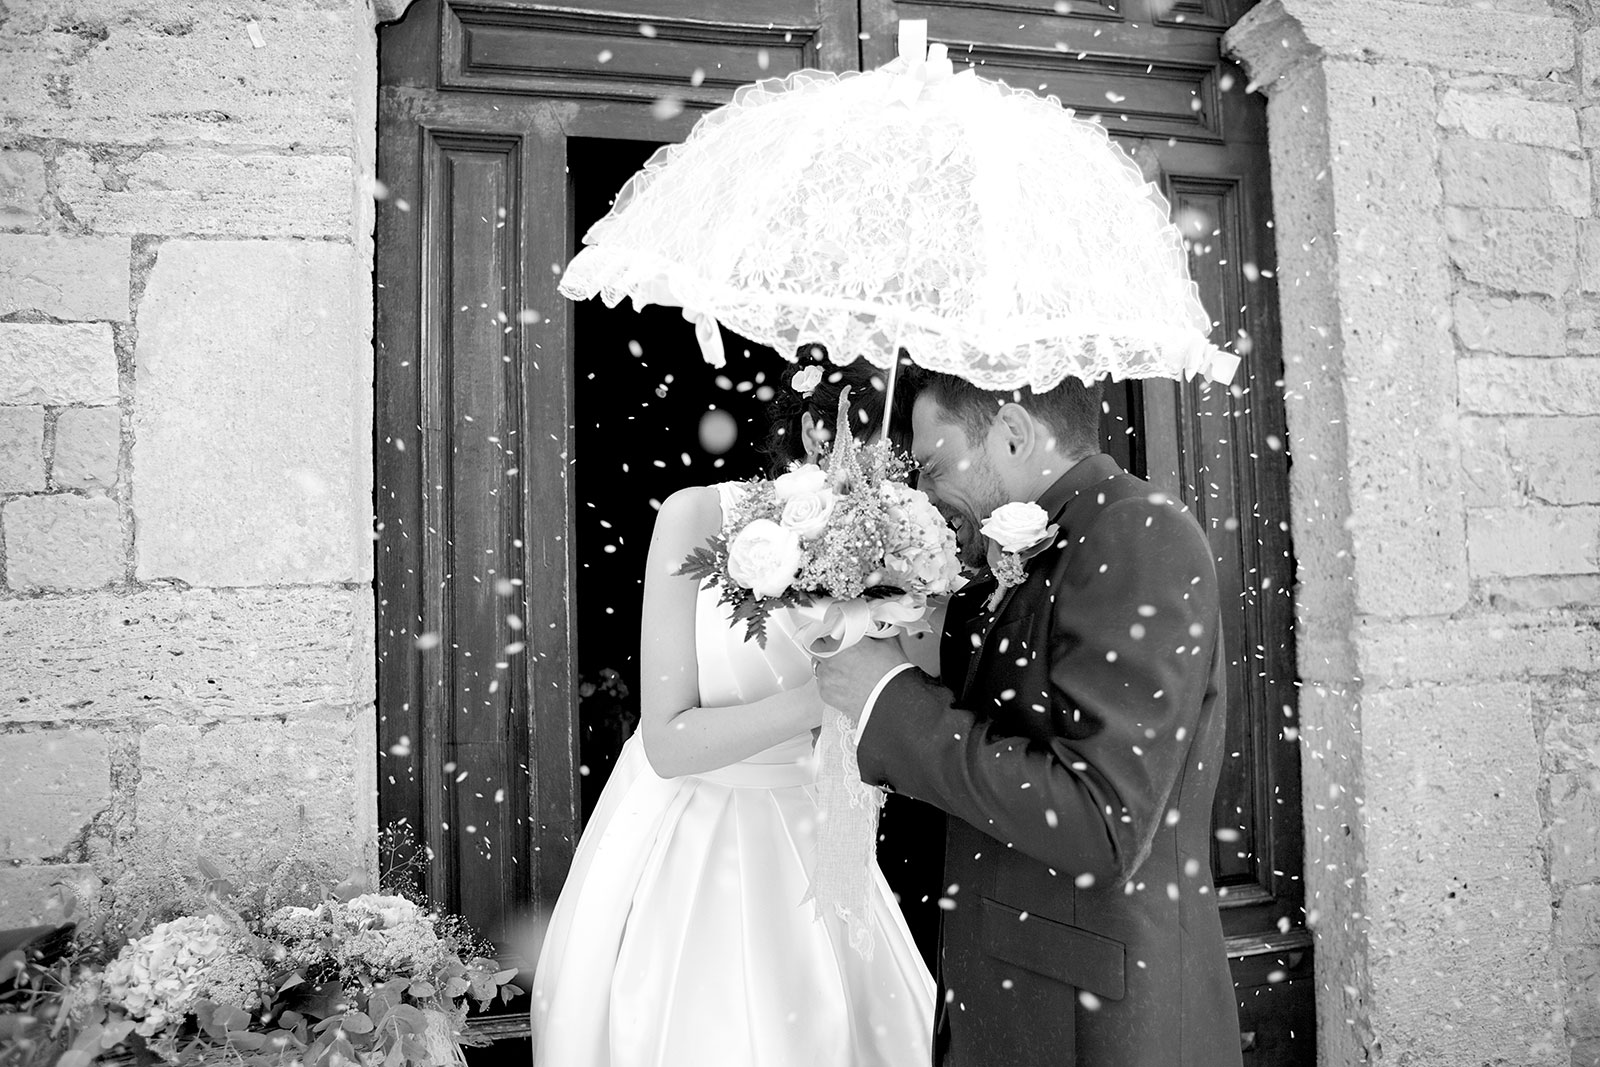 Wedding photographer Pisa